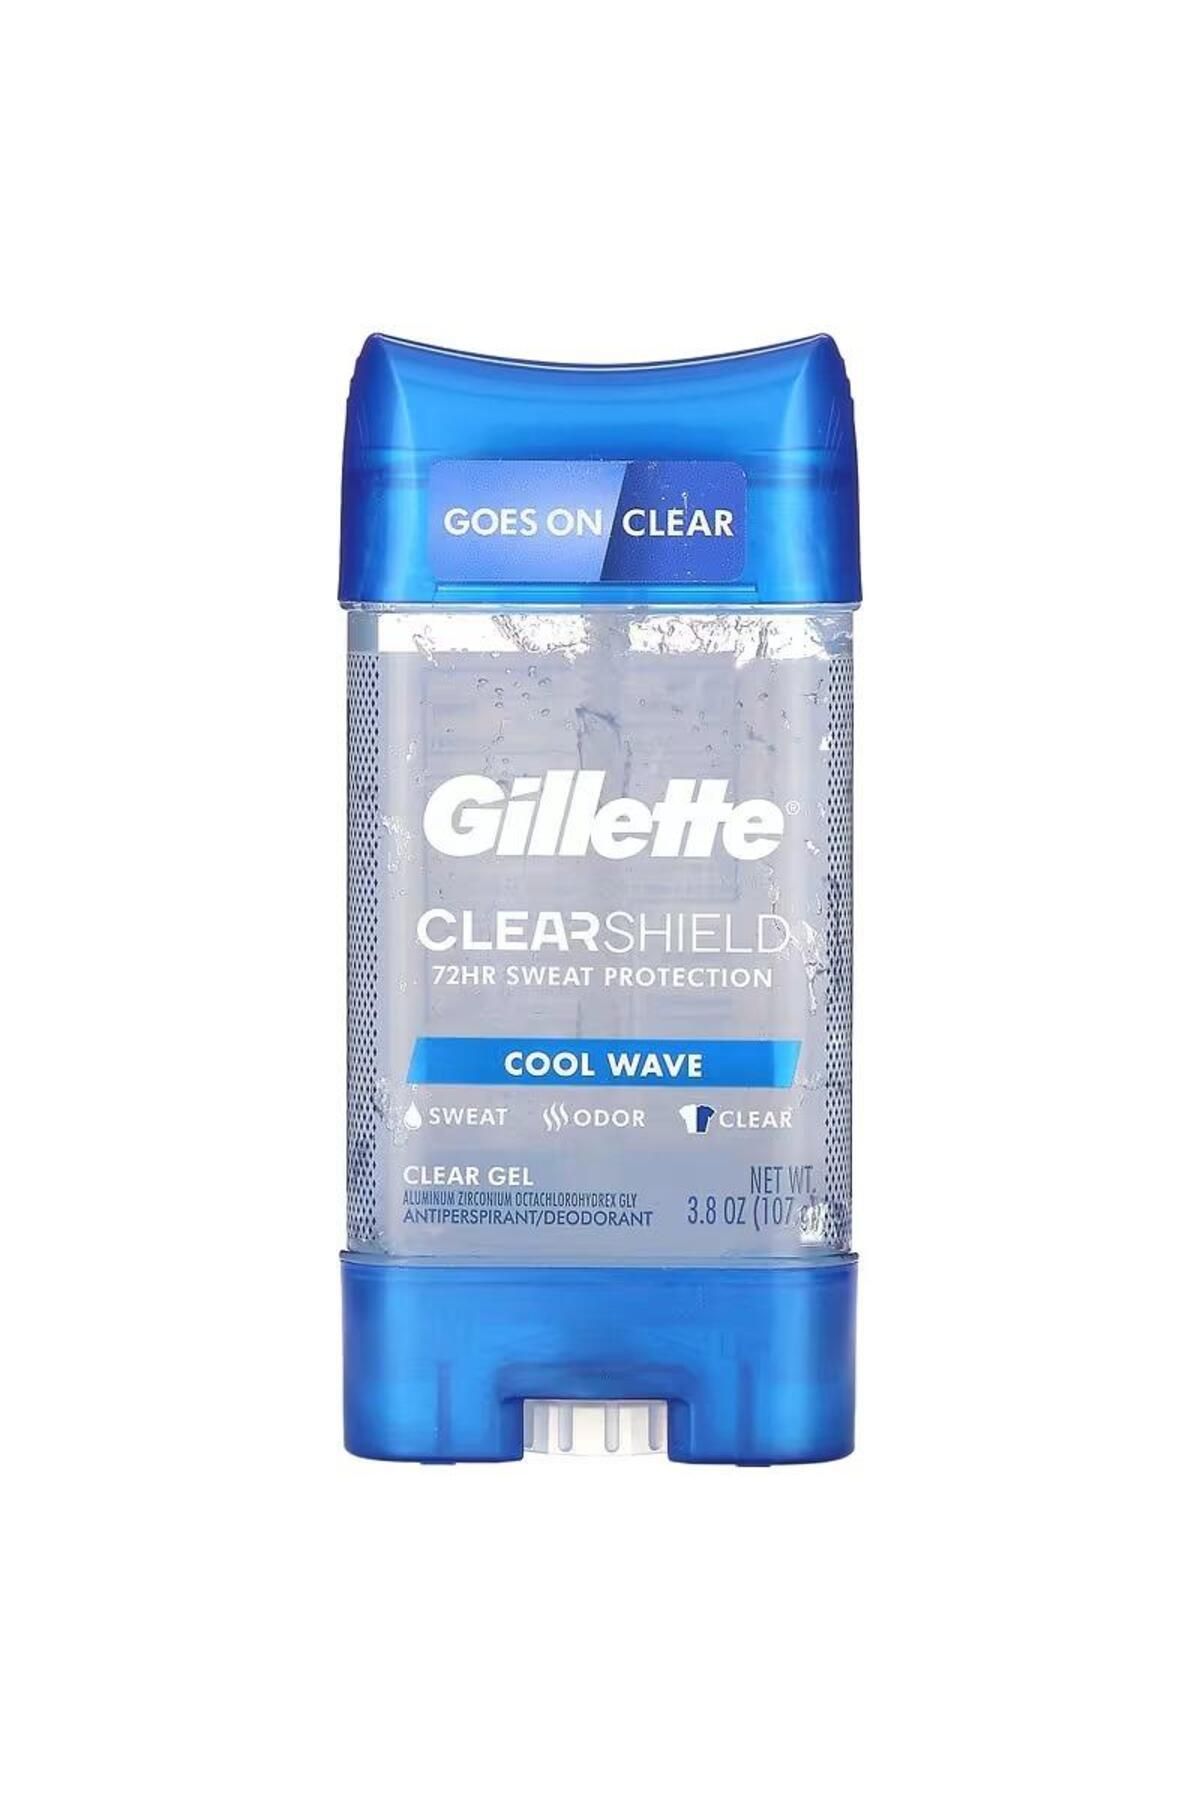 Gillette Endurance Elımınates Odor Cool Wave Gel Deodorant 107 g 47400097728